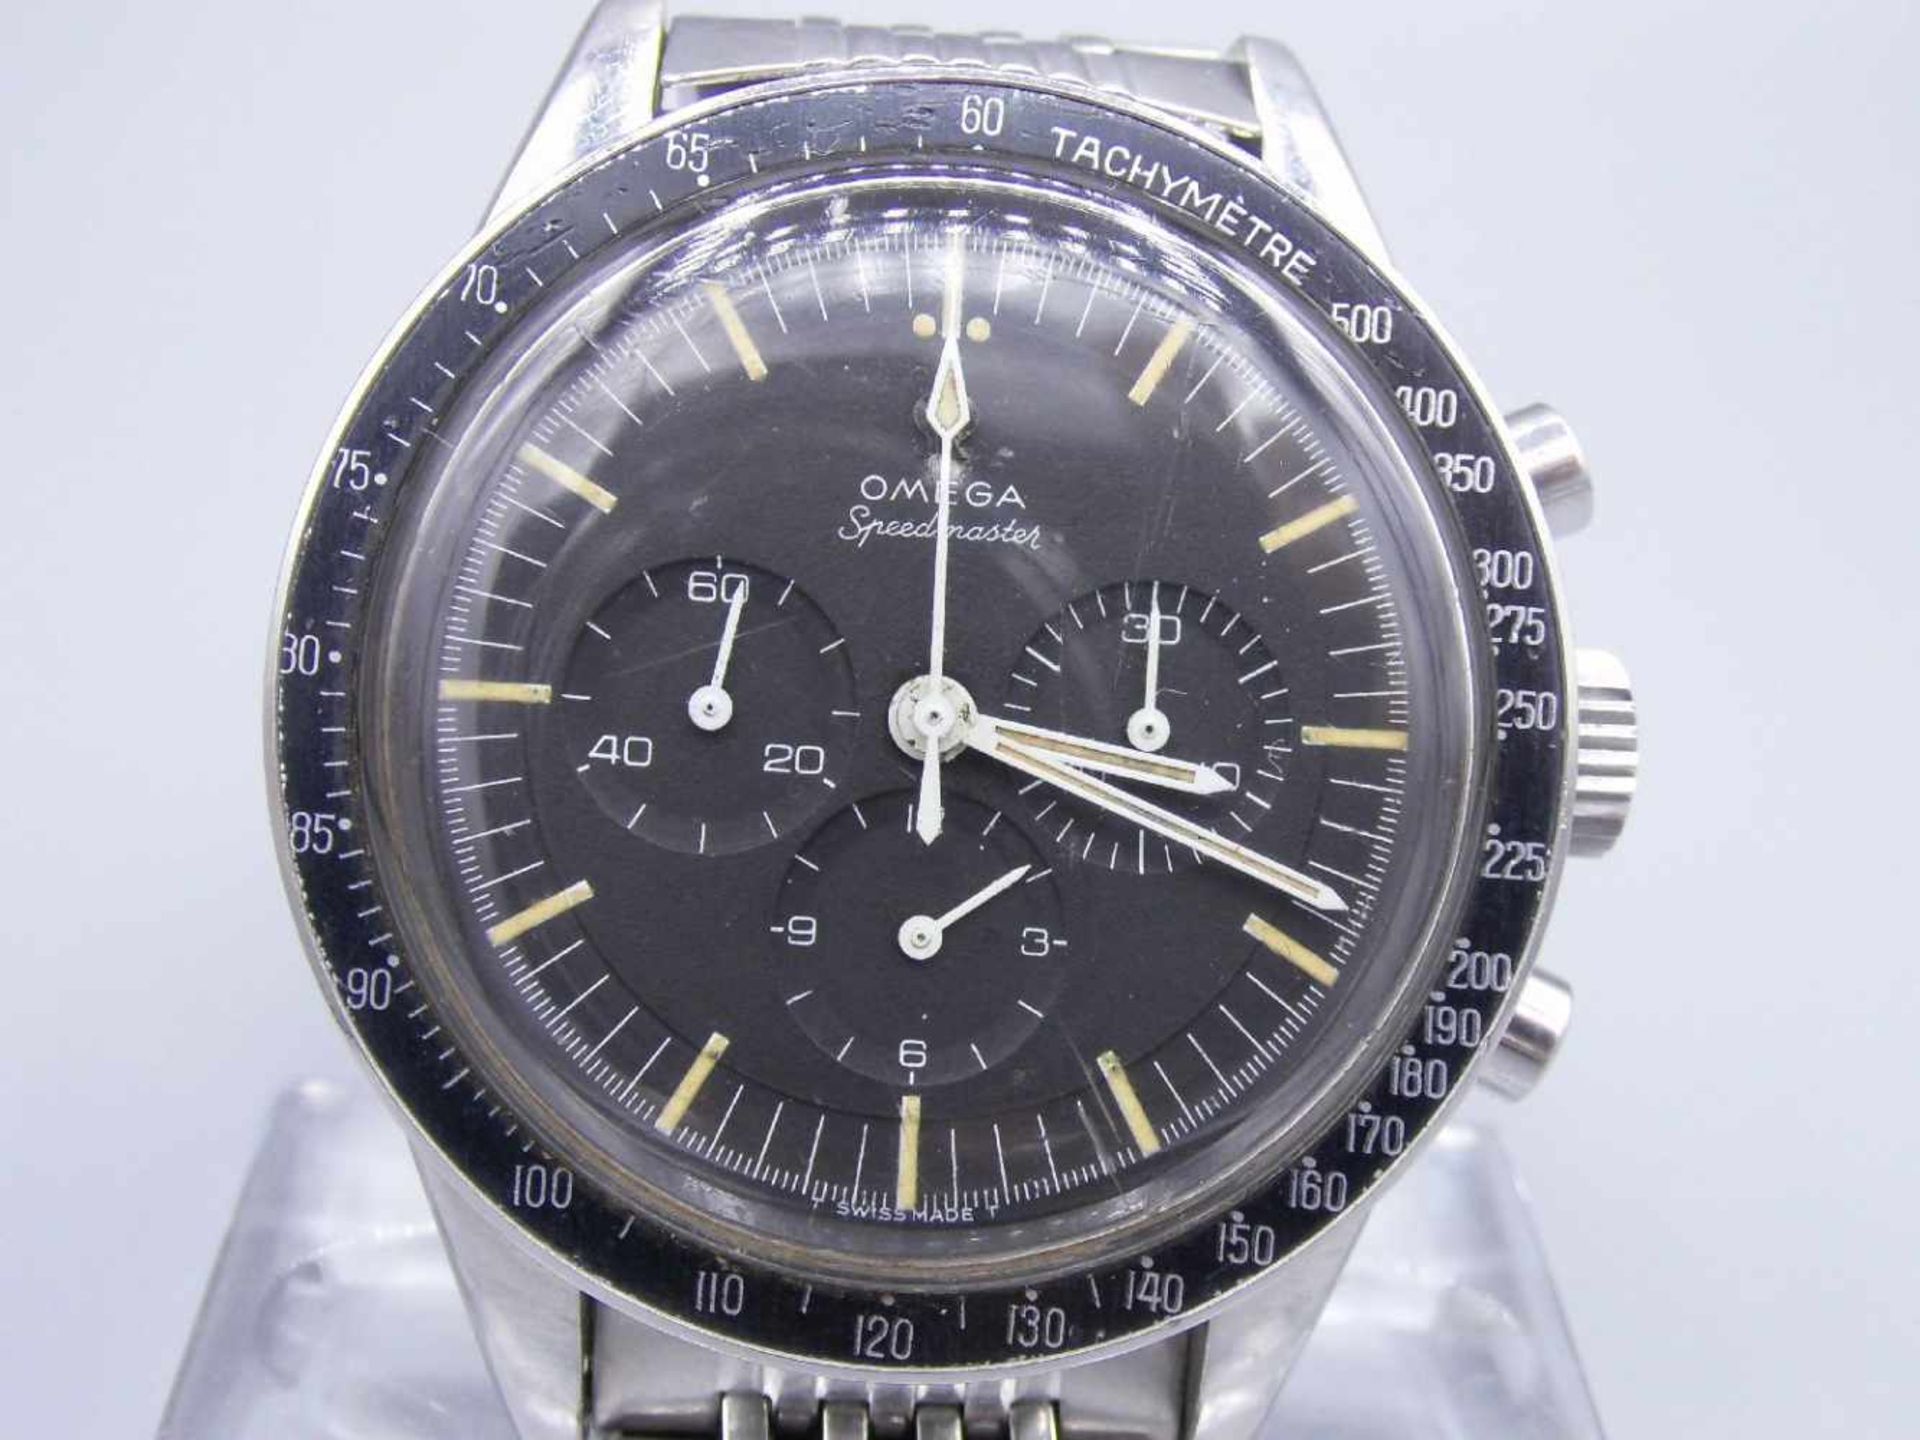 VINTAGE ARMBANDUHR / CHRONOGRAPH - Omega Speedmaster / wristwatch, Handaufzug, 1960er Jahre ( - Image 6 of 13